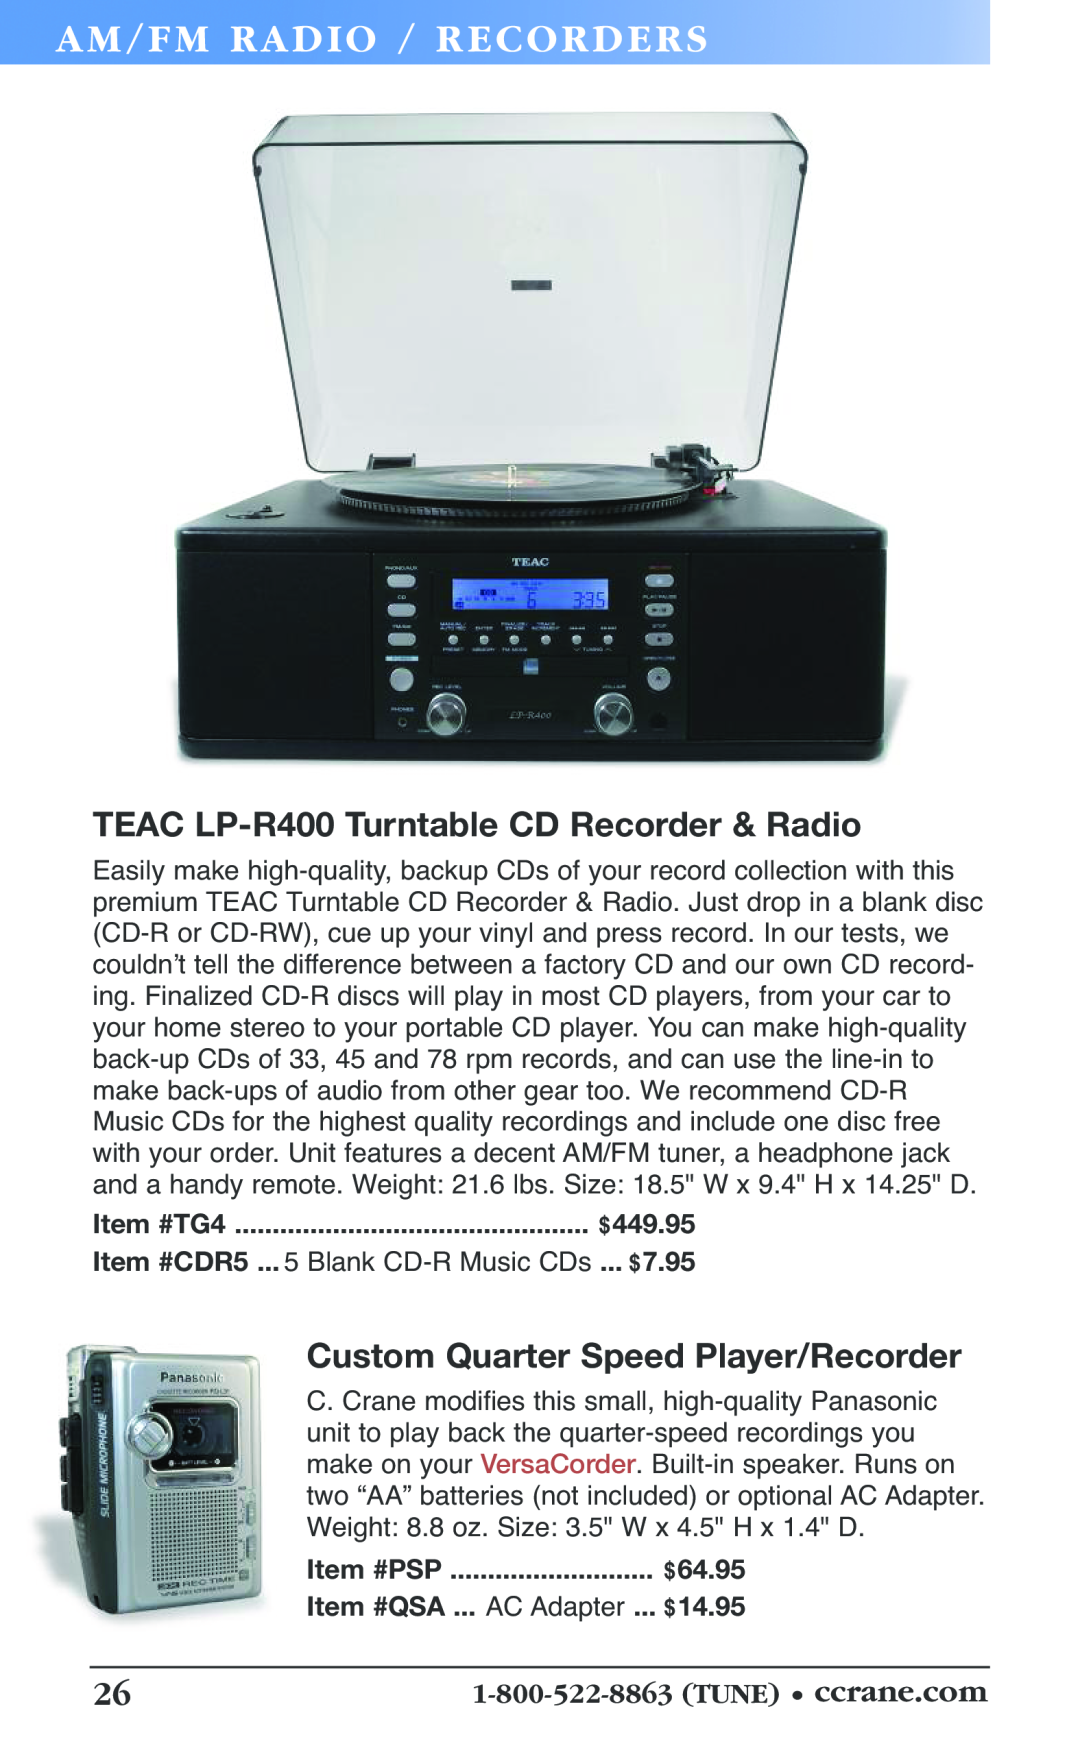 C. Crane 19f Am/ Fm Ra Di O / Recorders, TEAC LP-R400Turntable CD Recorder & Radio, Custom Quarter Speed Player/Recorder 